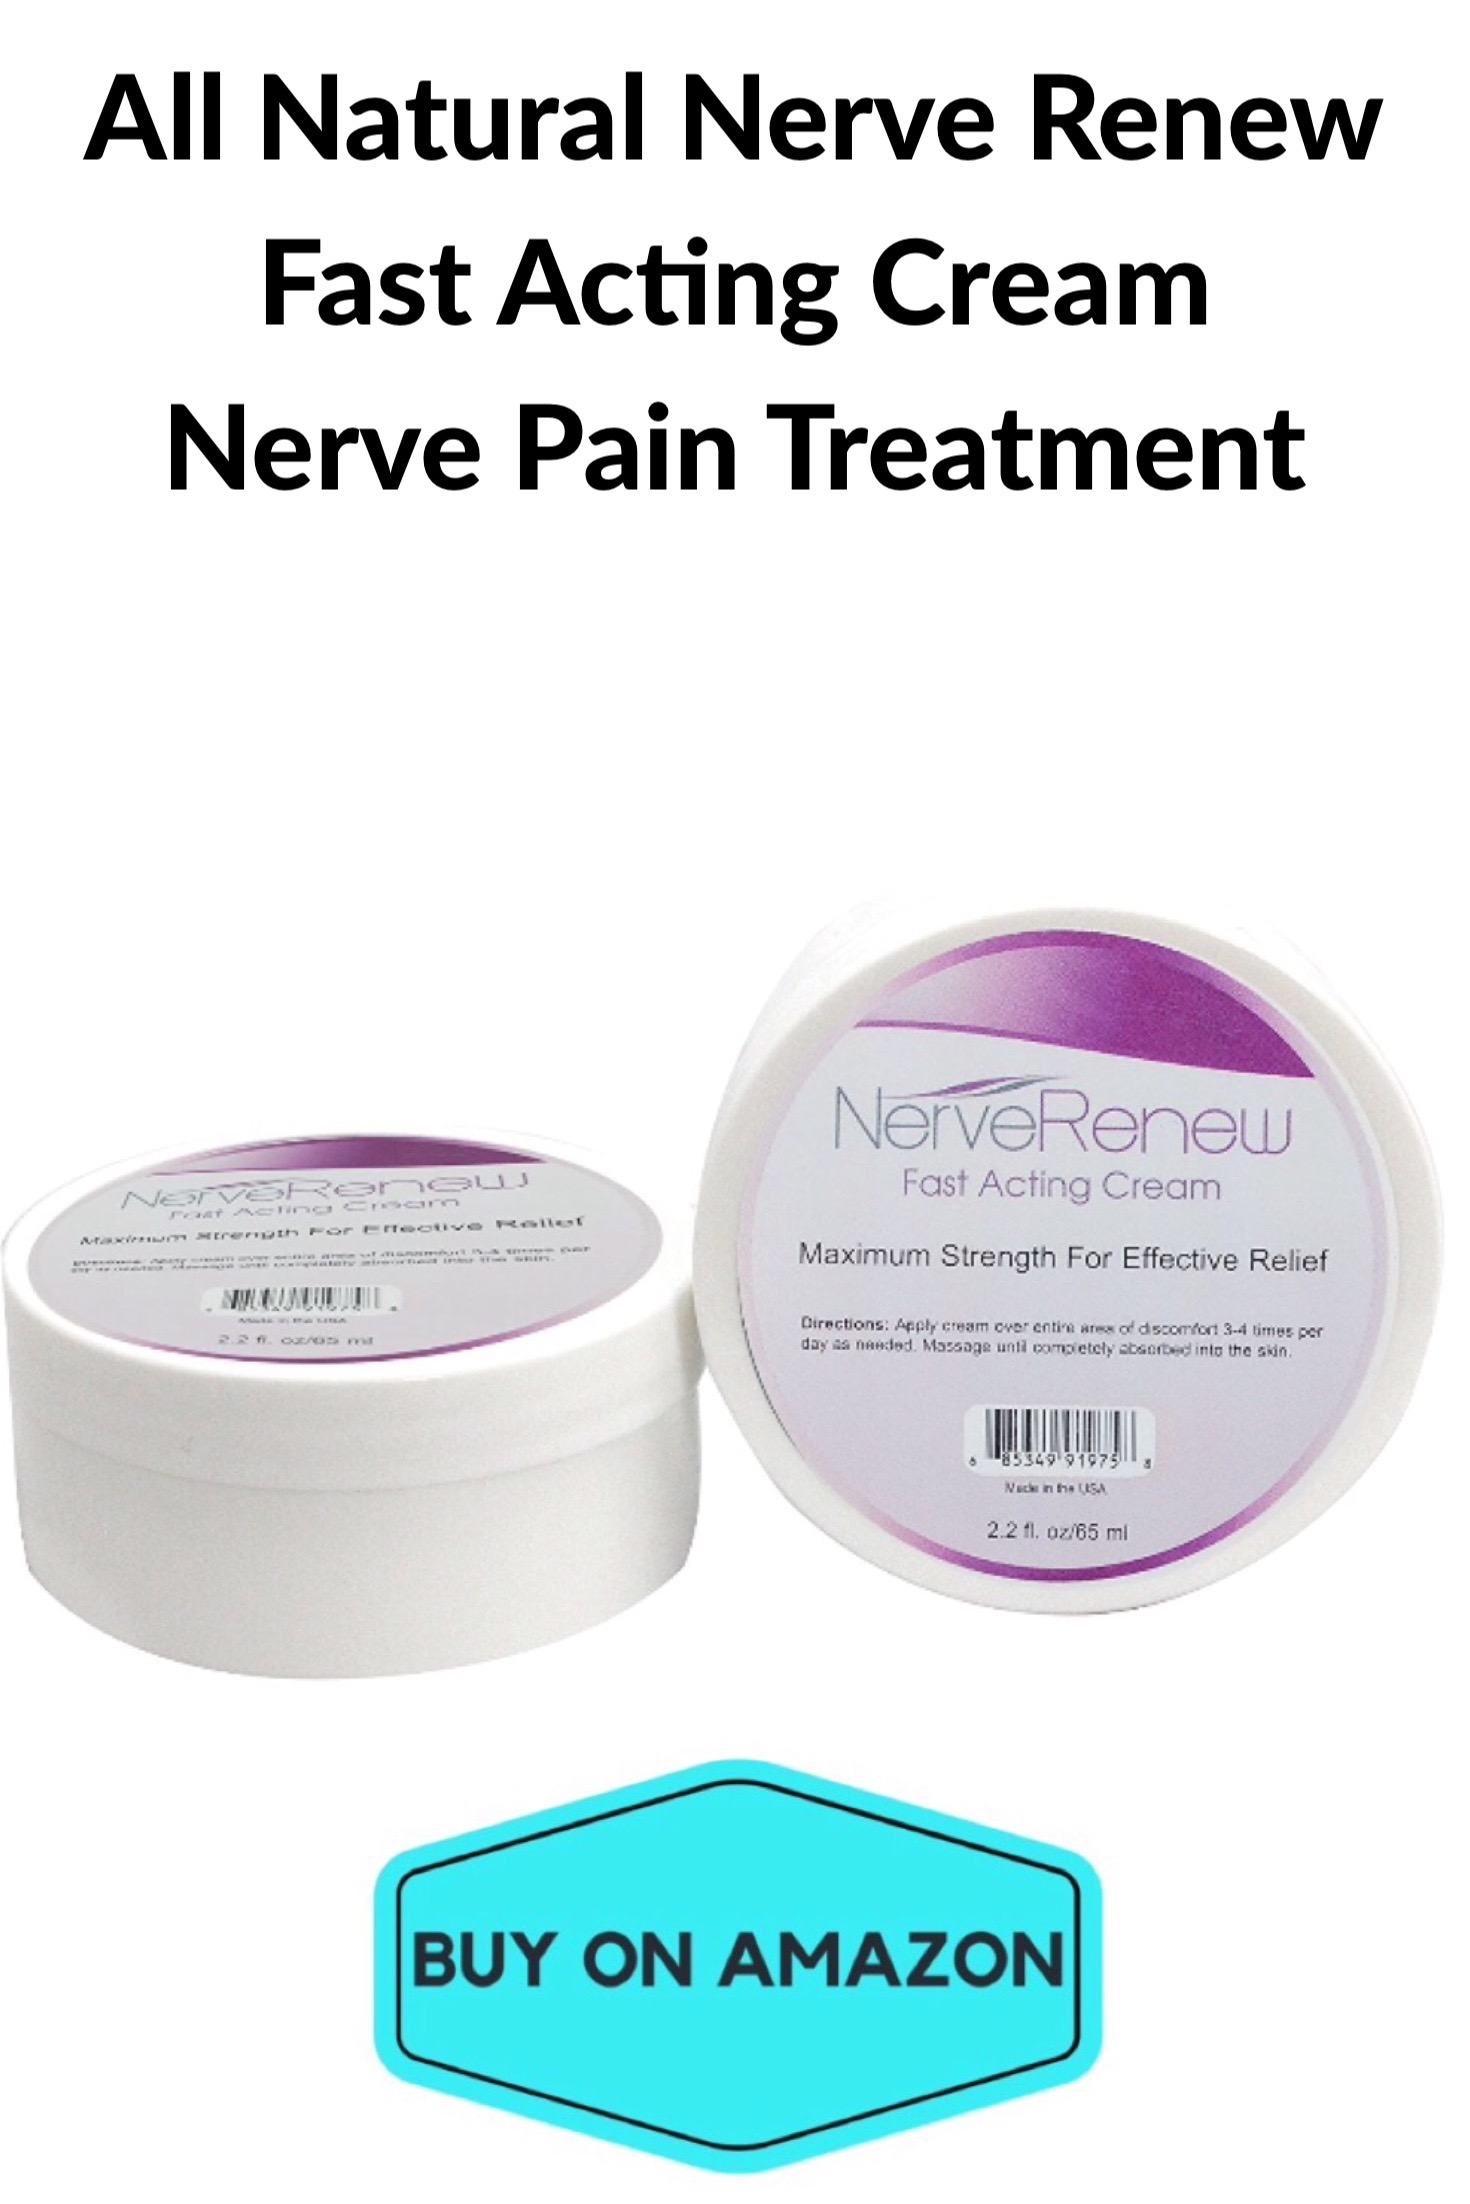 Fast Acting Cream Nerve Pain Treatment